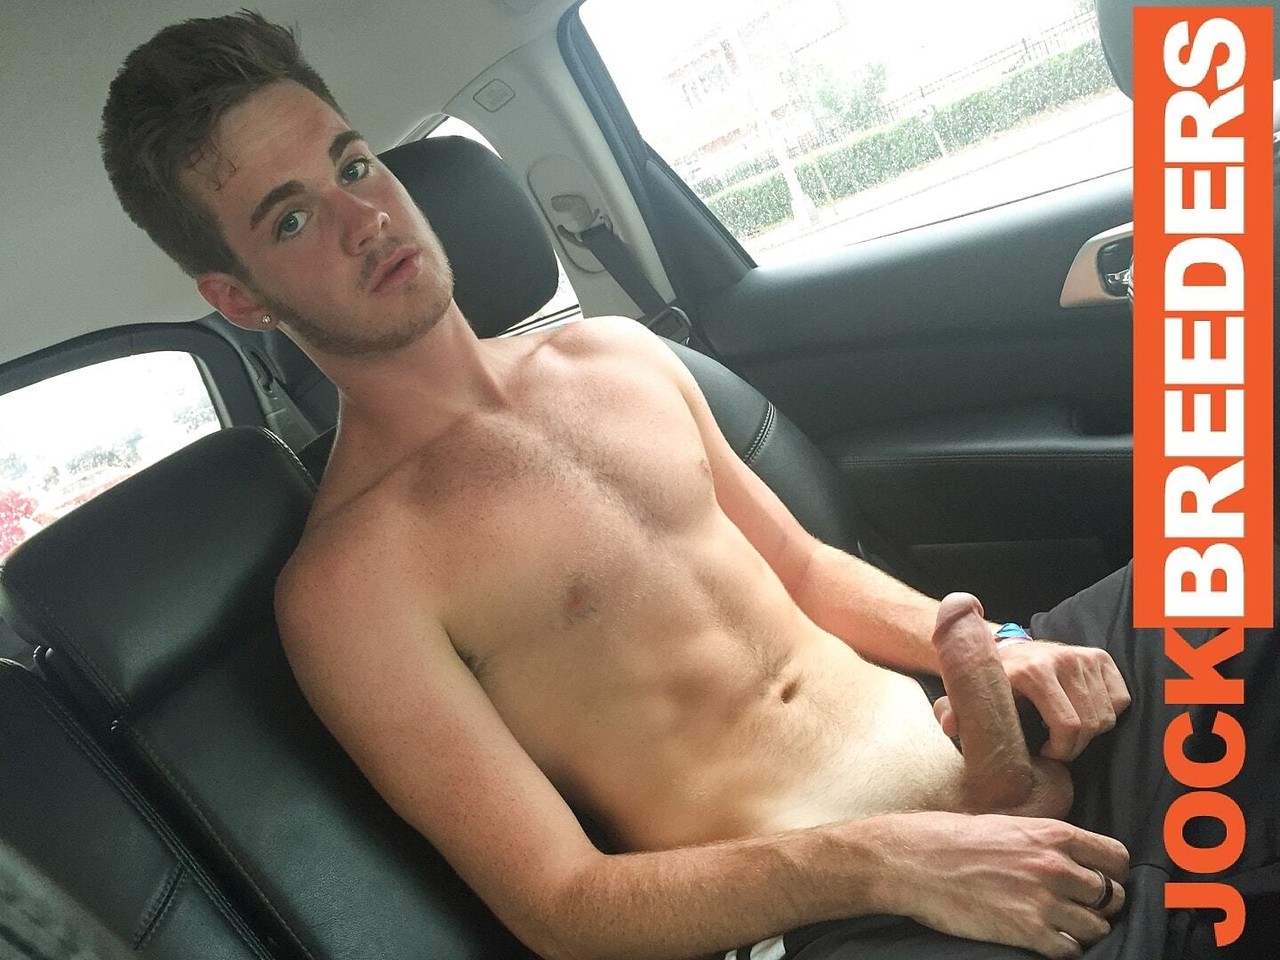 Horny gay stud Benji Banks stripping and masturbating in the cab  